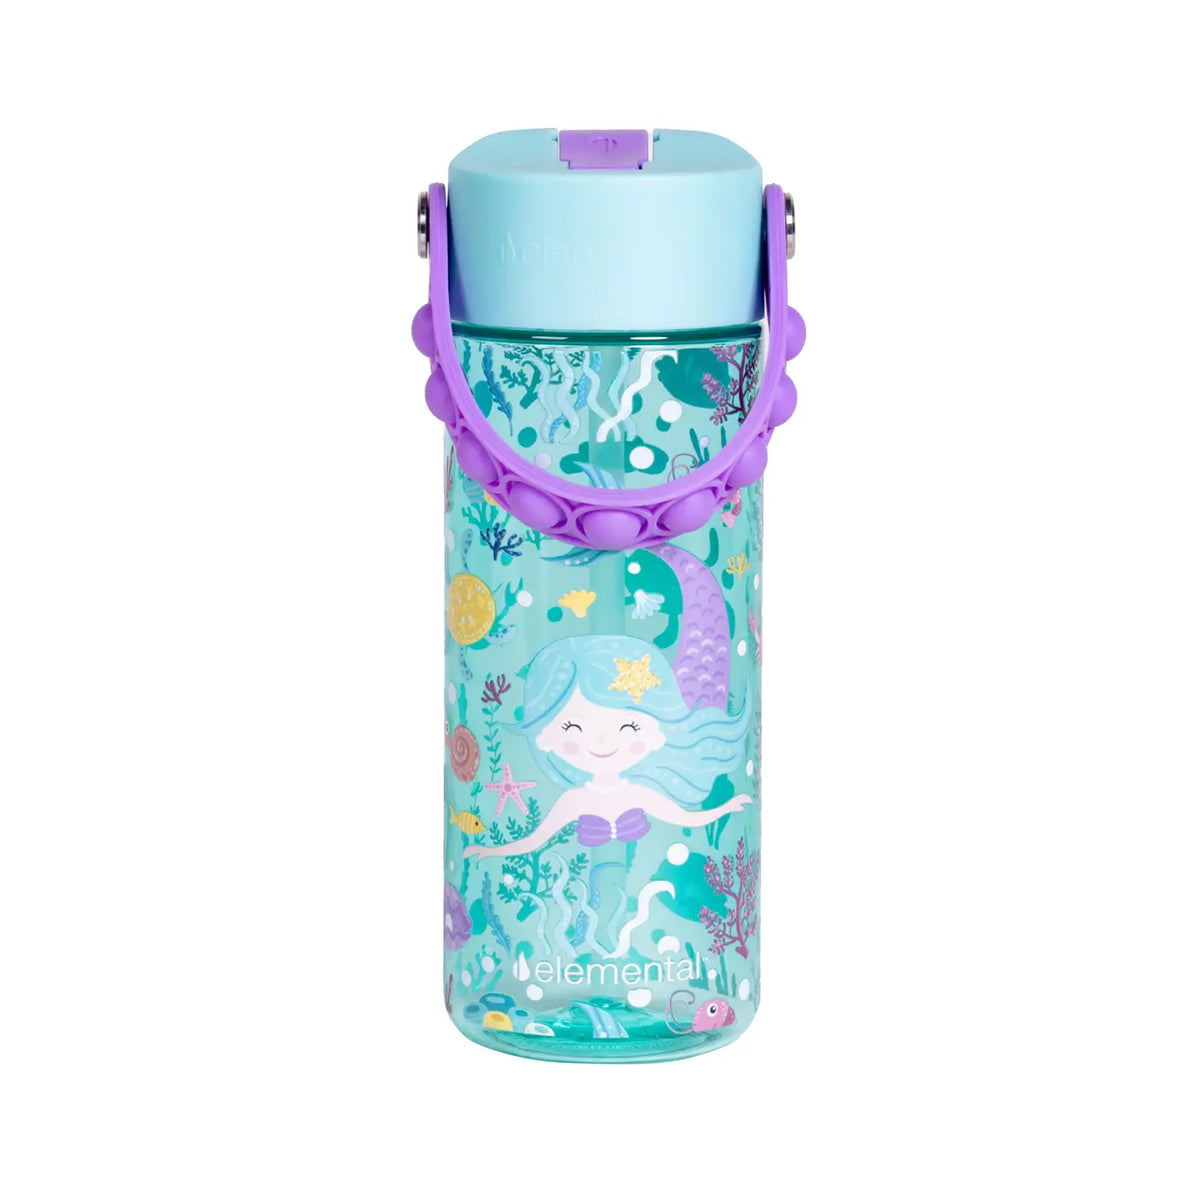 Elemental- Water bottles